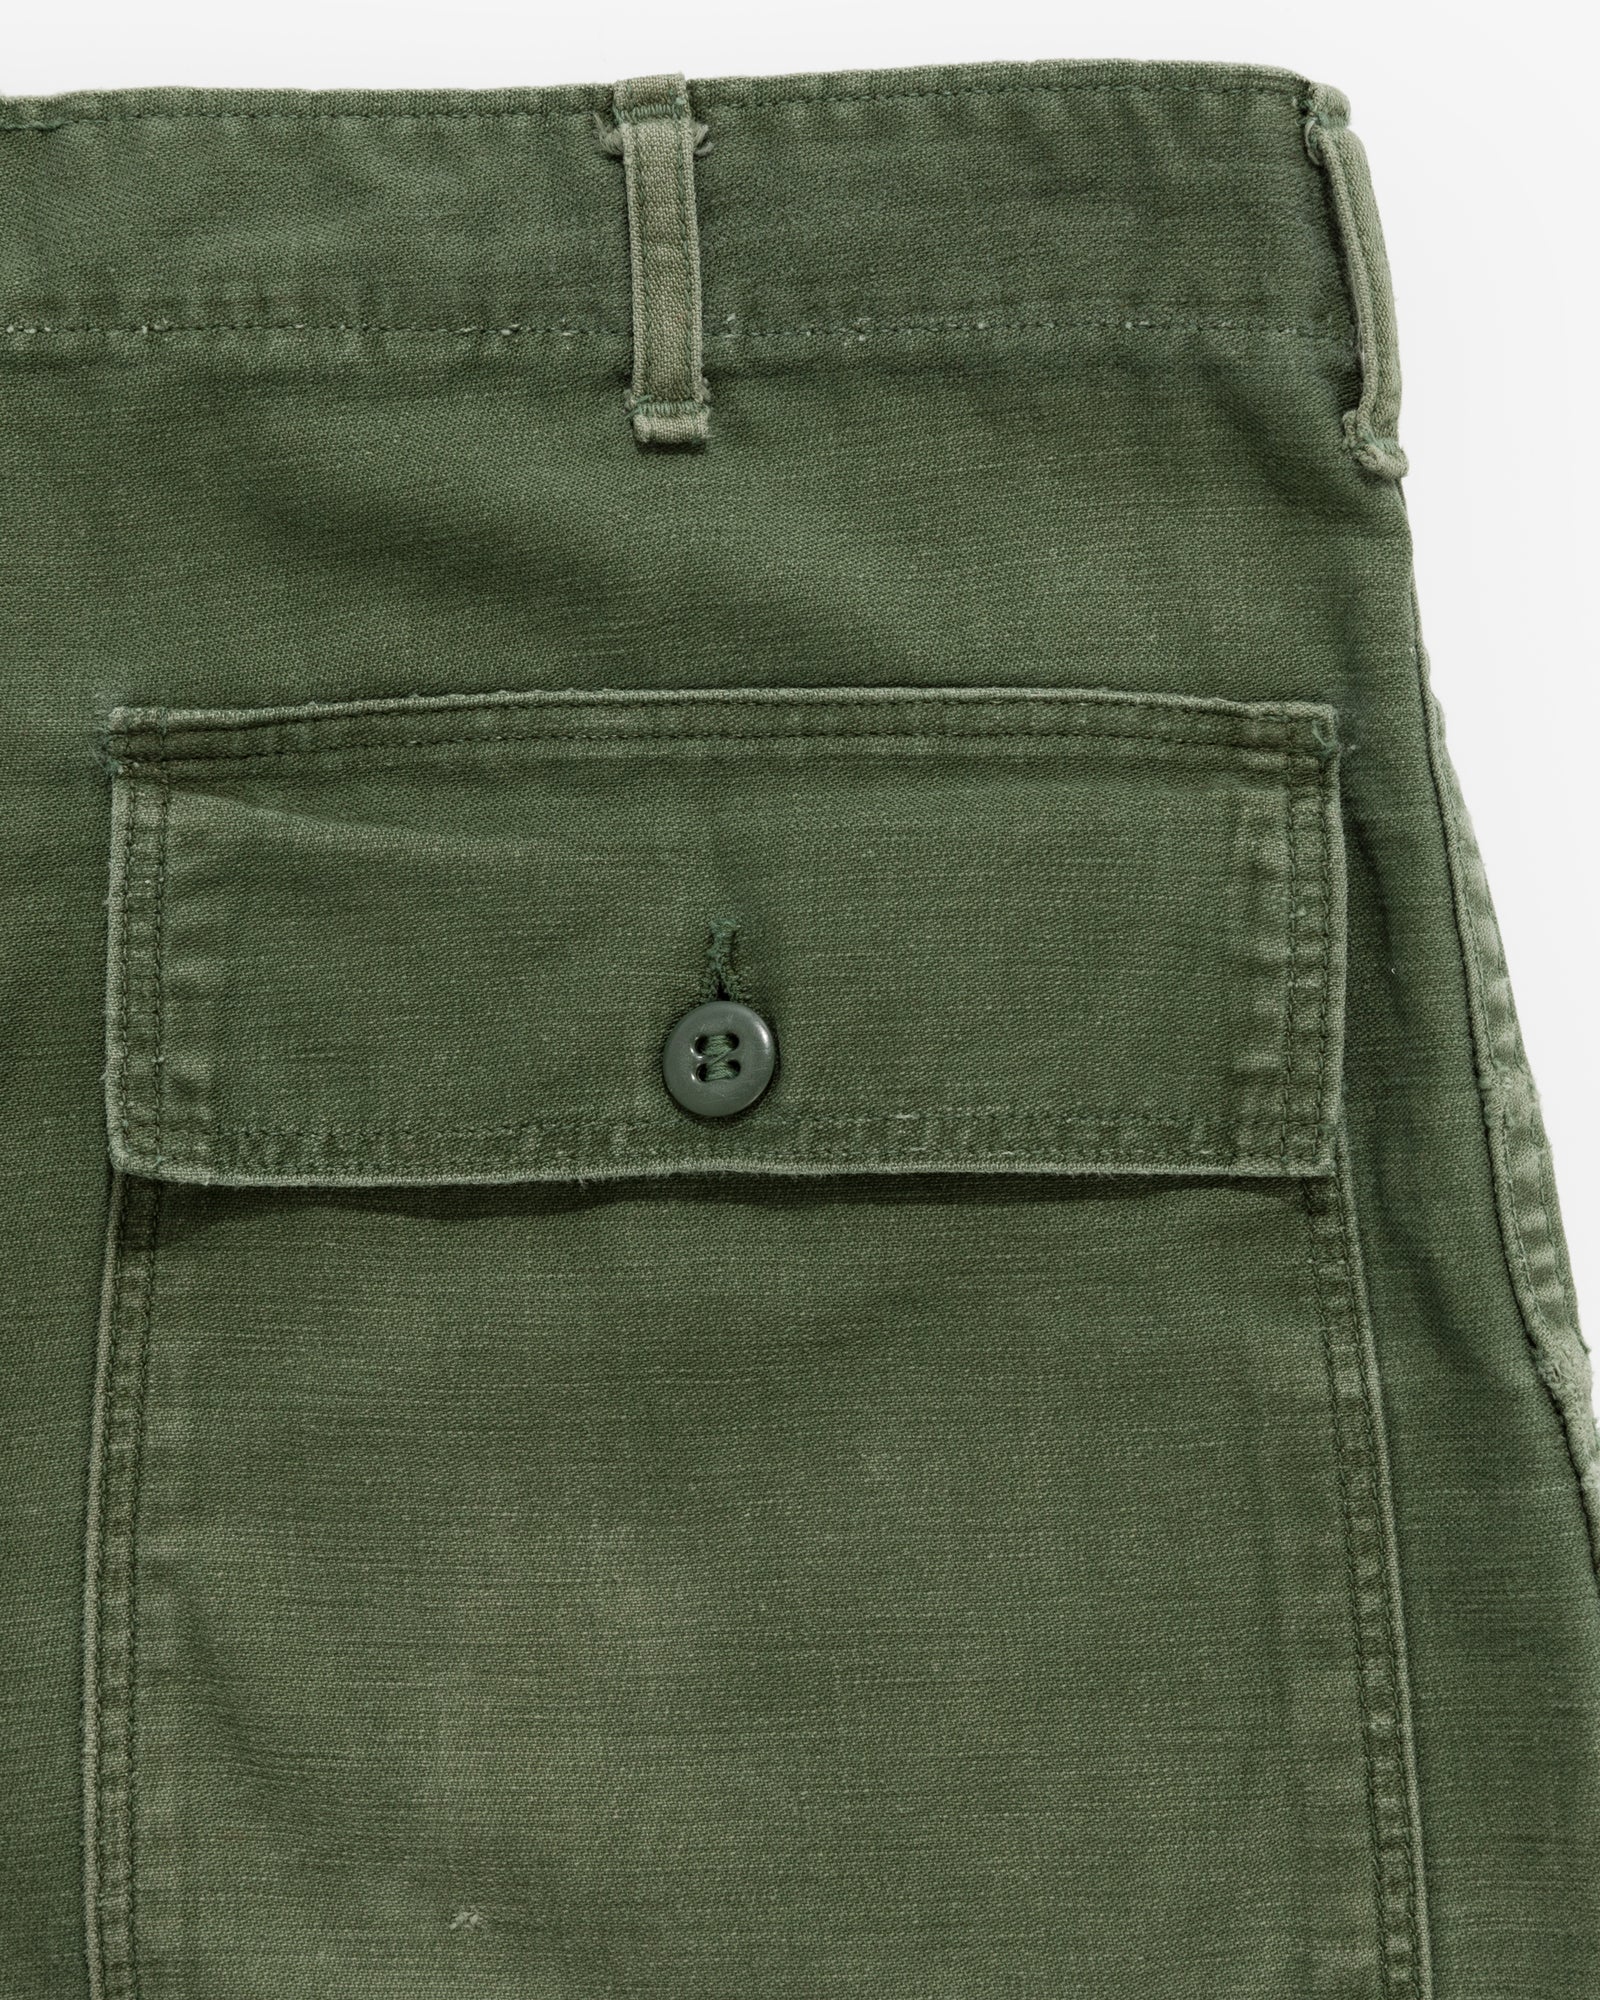 Vintage 107 Type 1 Military Pant